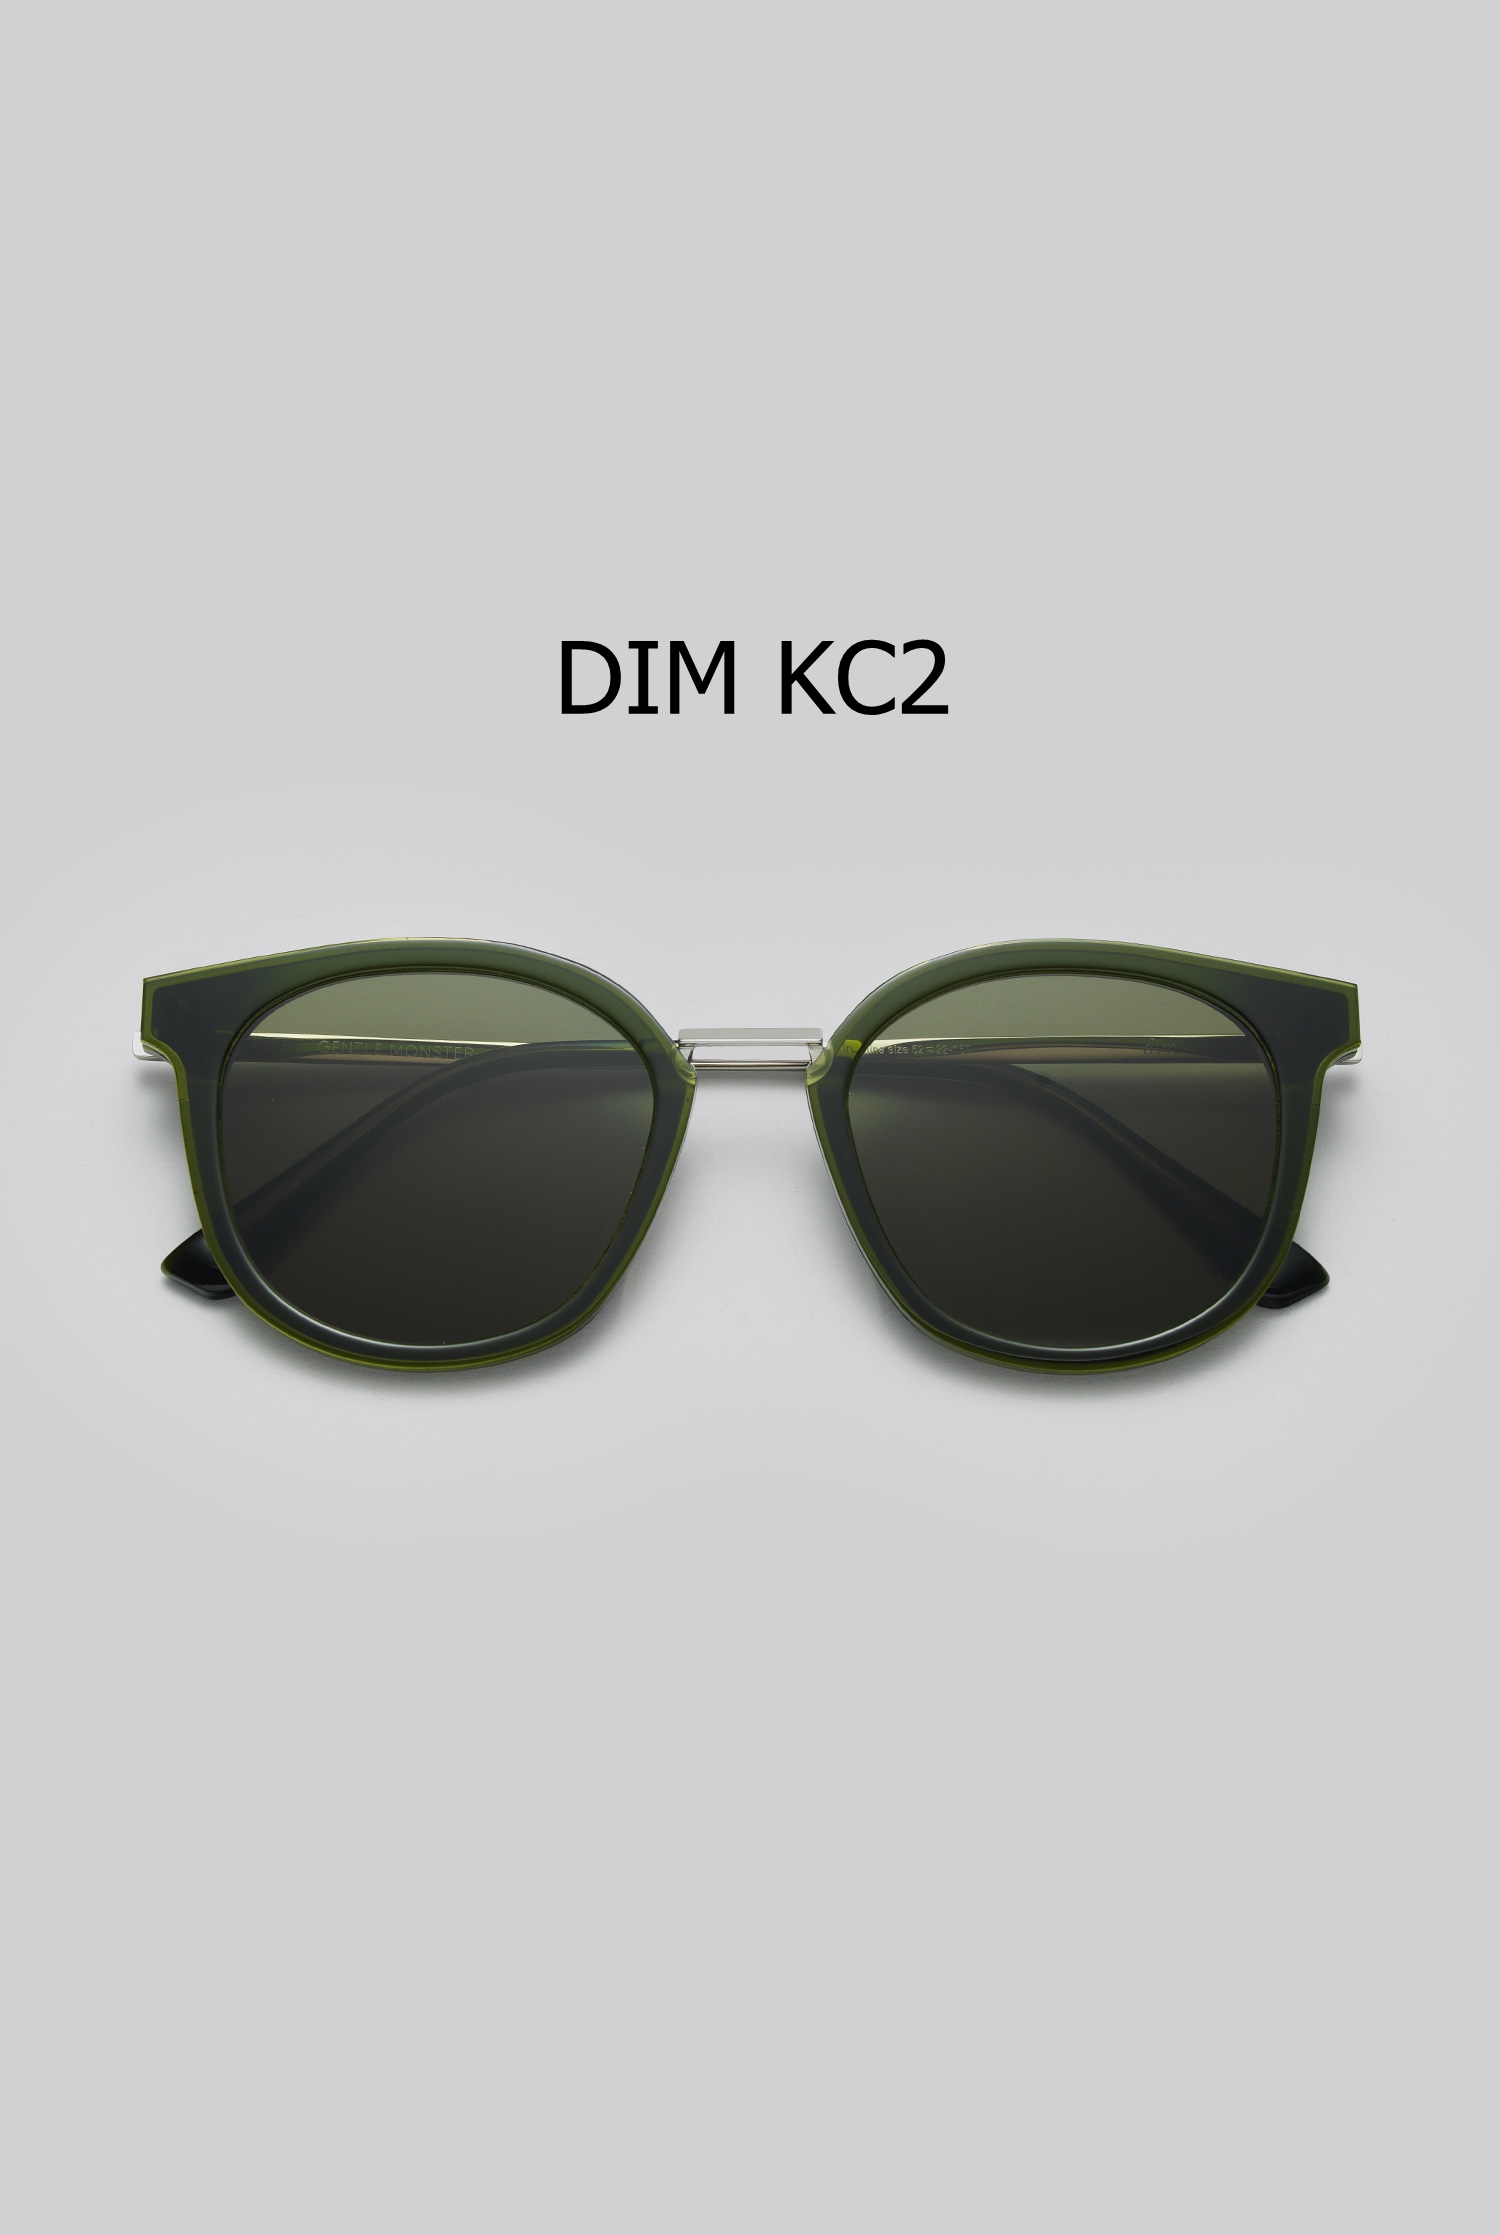 DIM KC2